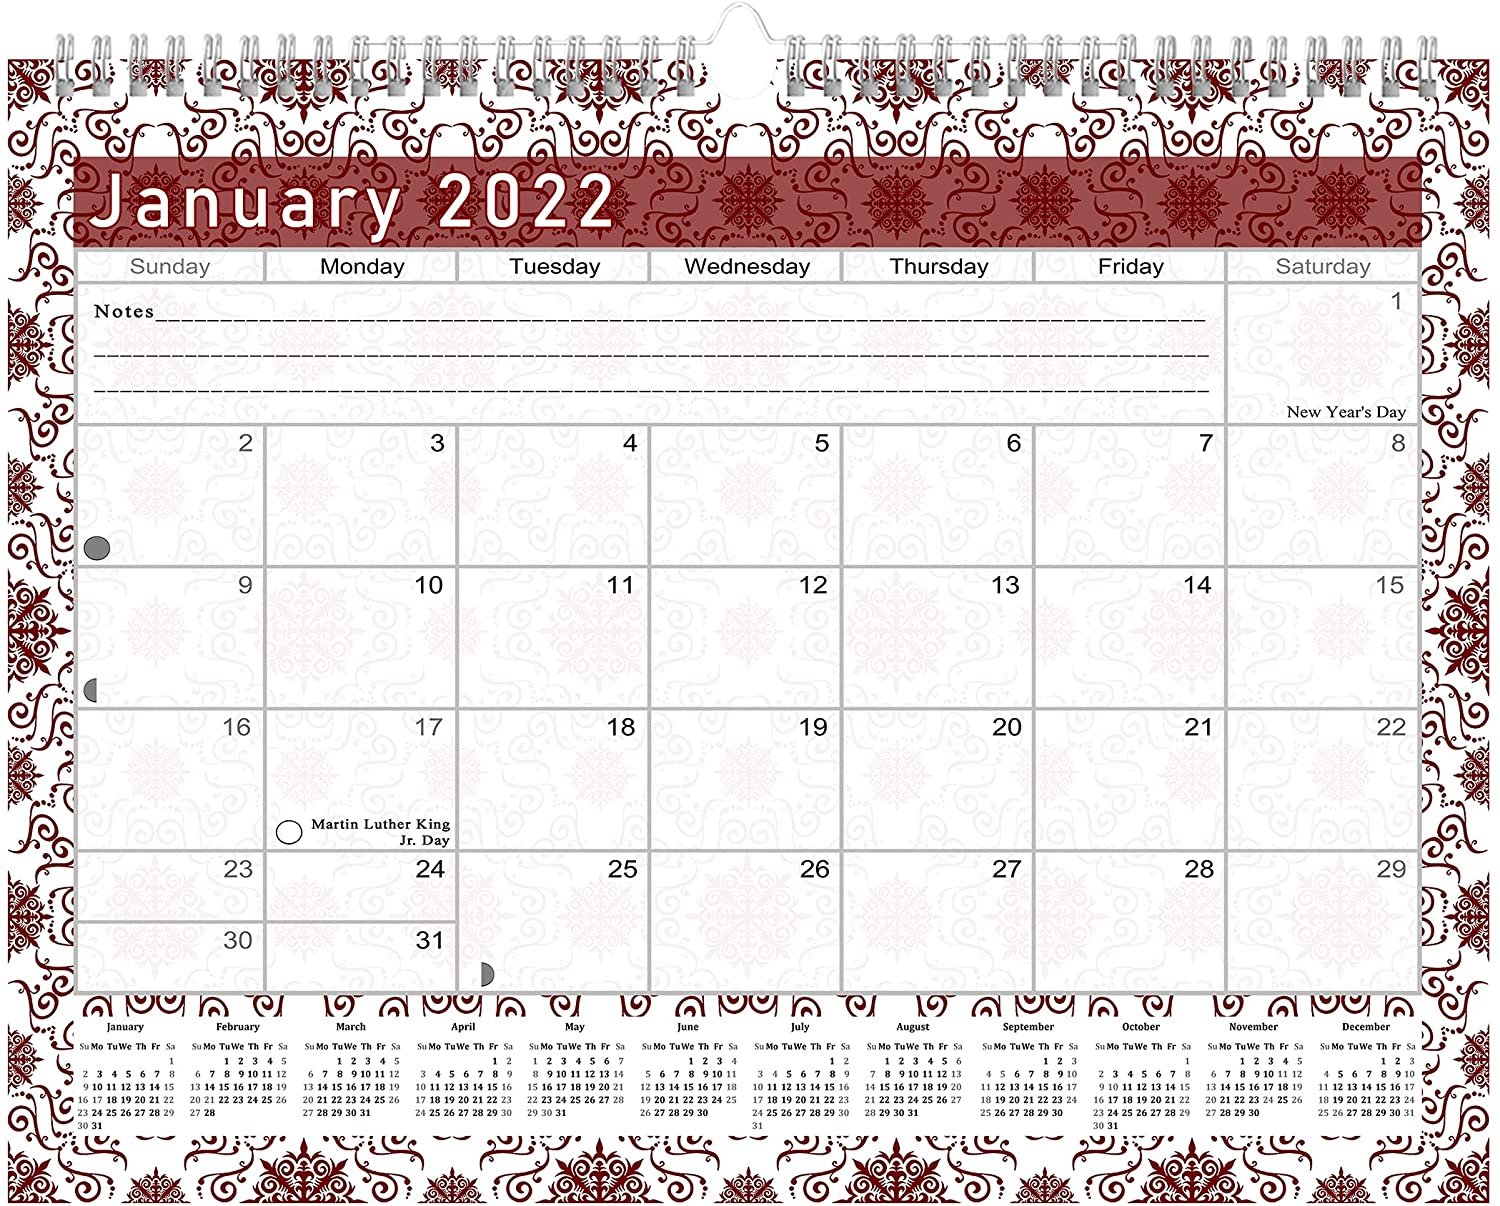 2021 2022 Monthly Spiral Bound Wall / Desk Calendar 16 Months